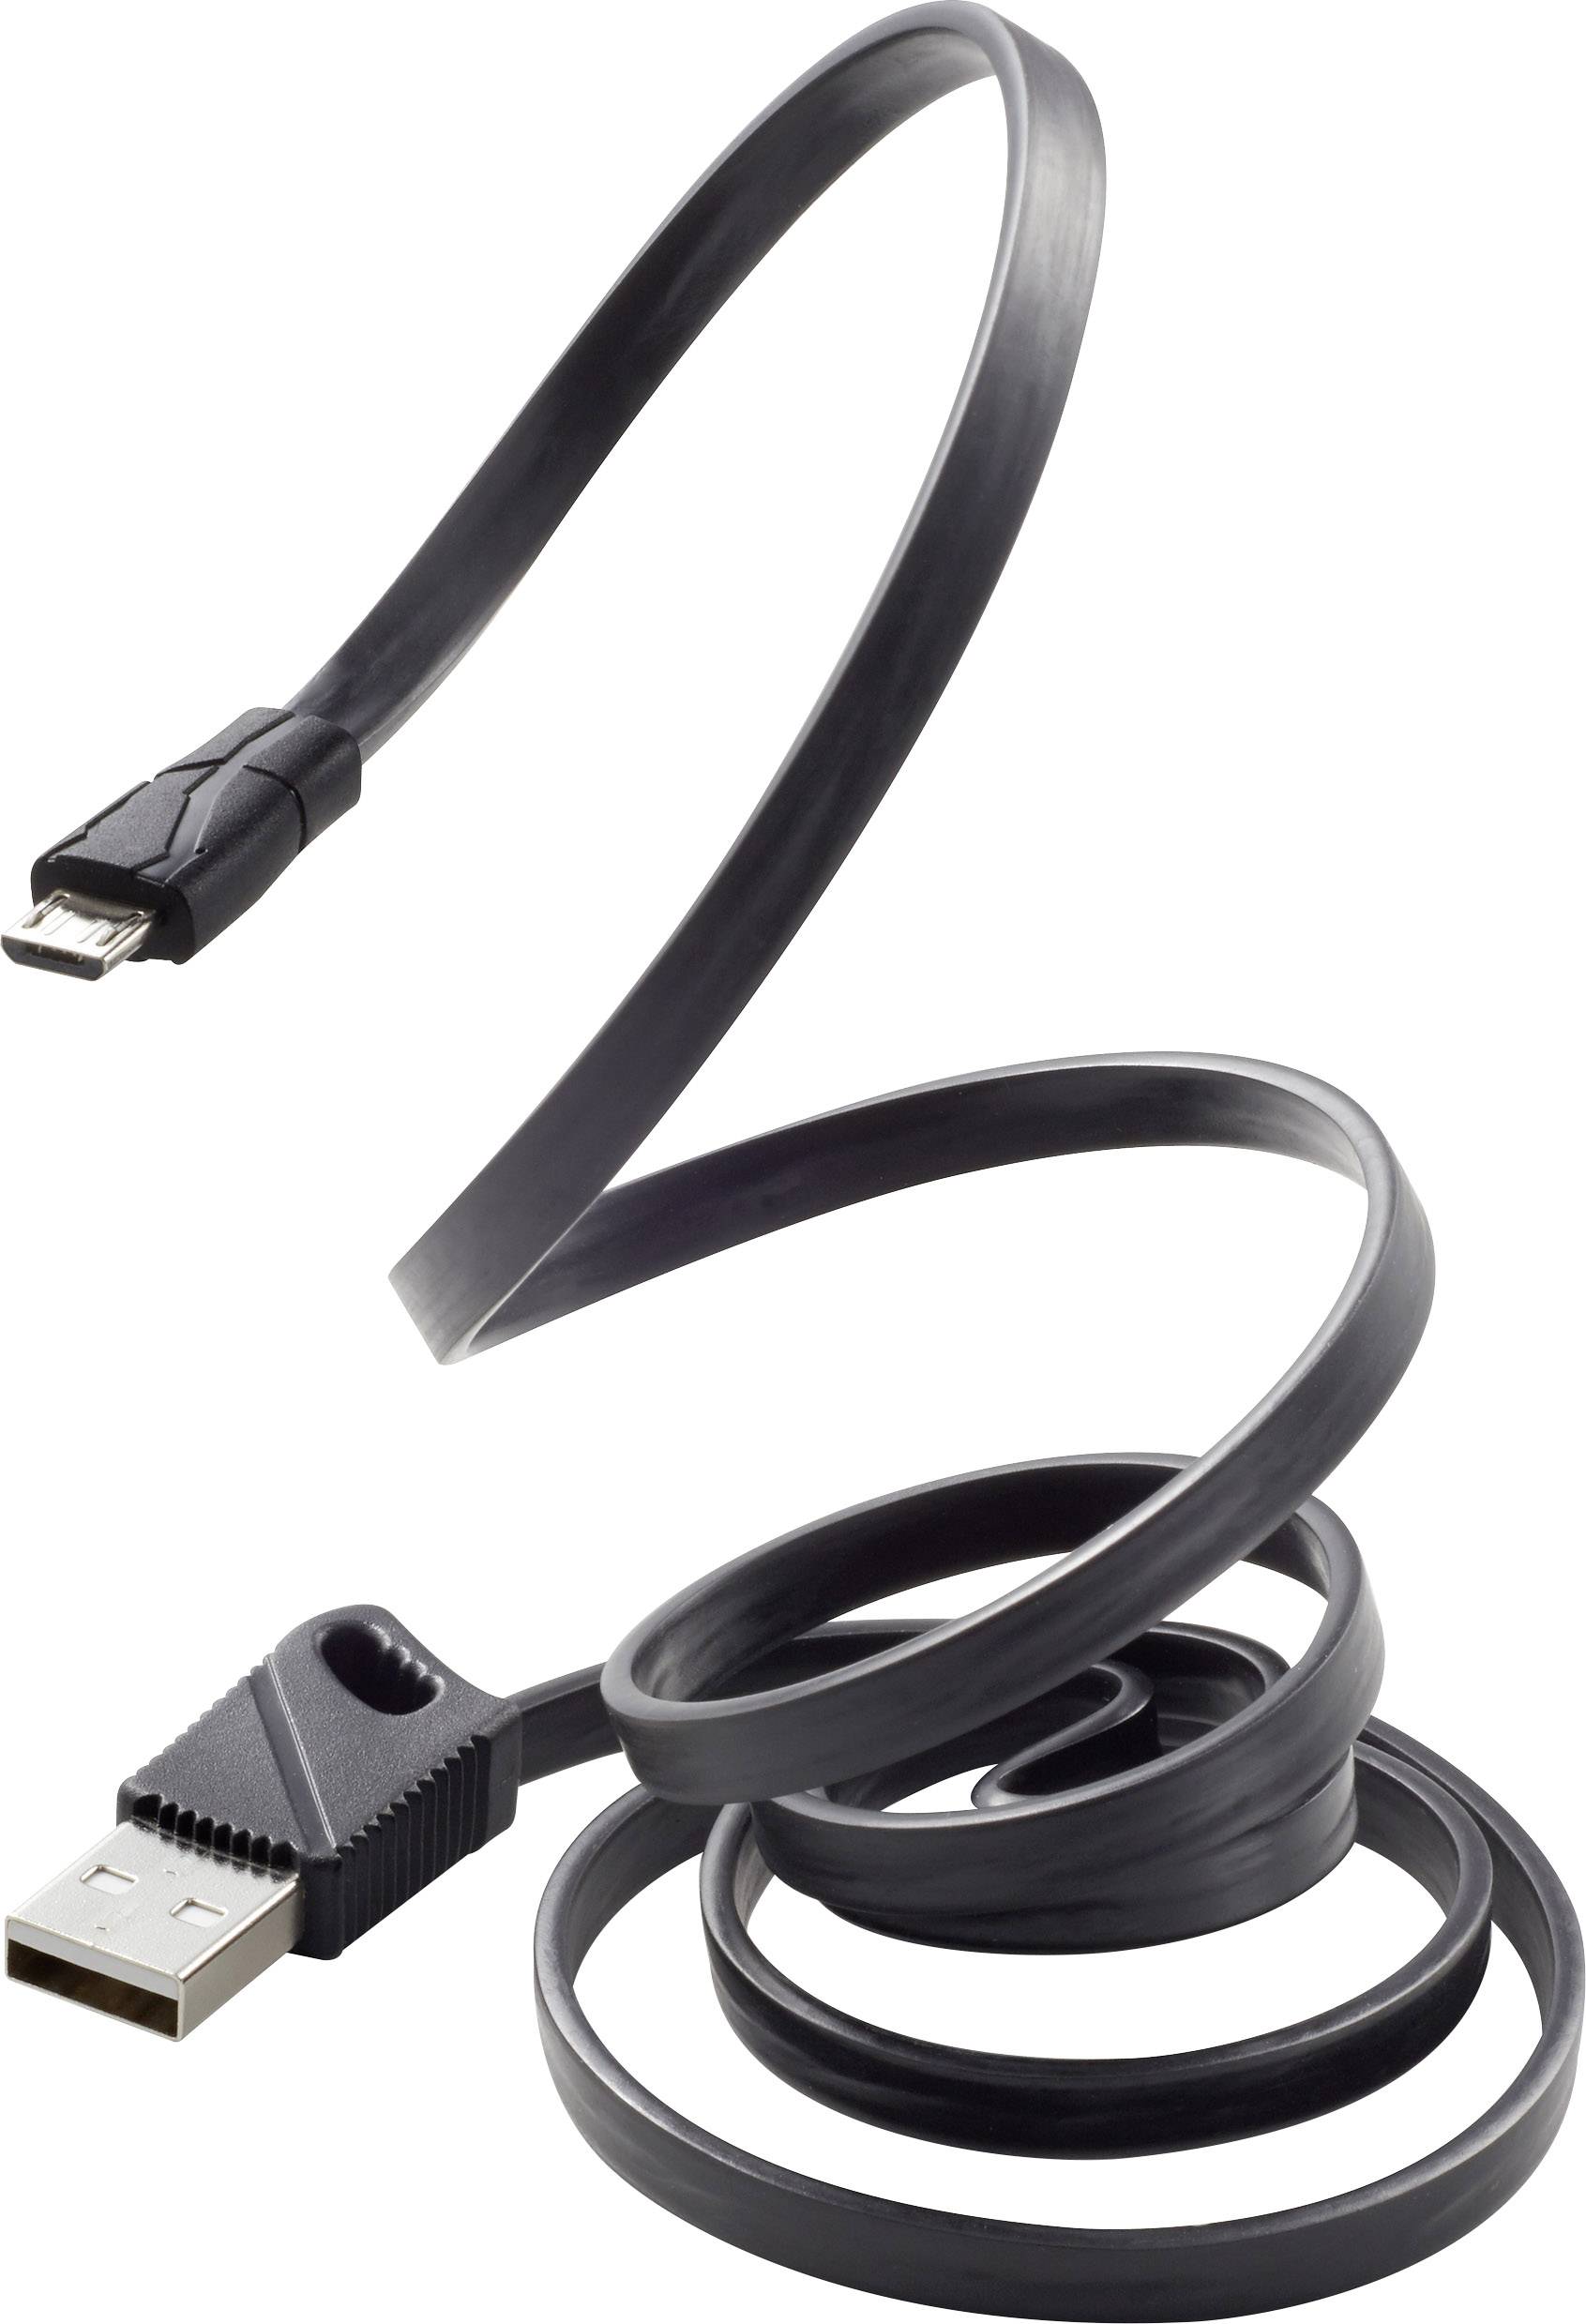 RENKFORCE USB 2.0 Anschlusskabel [1x USB 2.0 Stecker A - 1x USB 2.0 Stecker Micro-B] 1 m